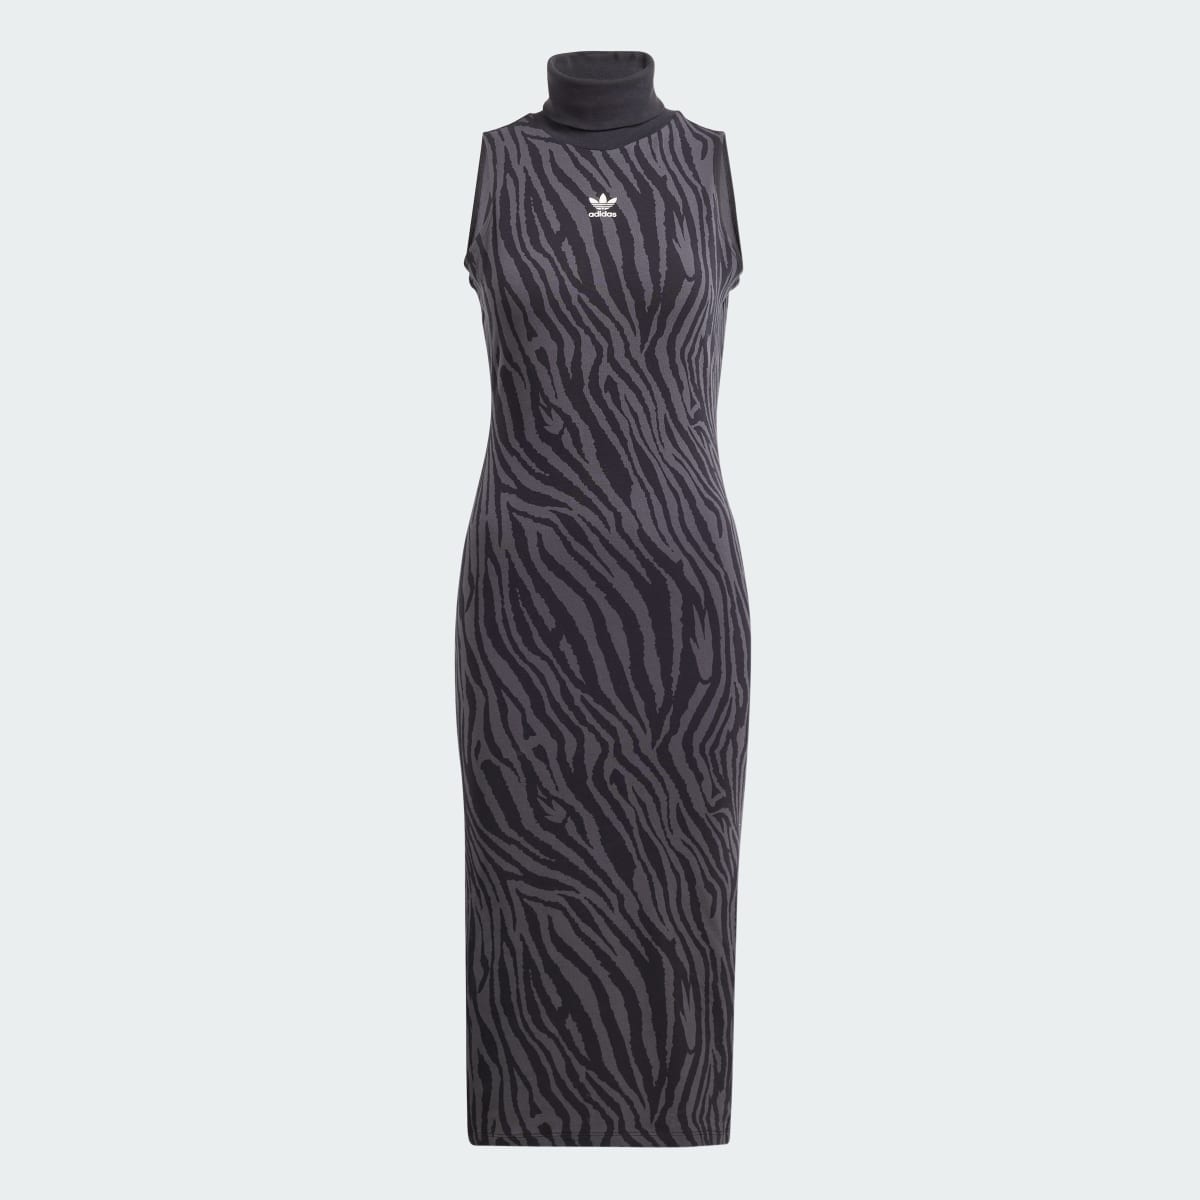 Adidas Allover Zebra Animal Print Dress. 5